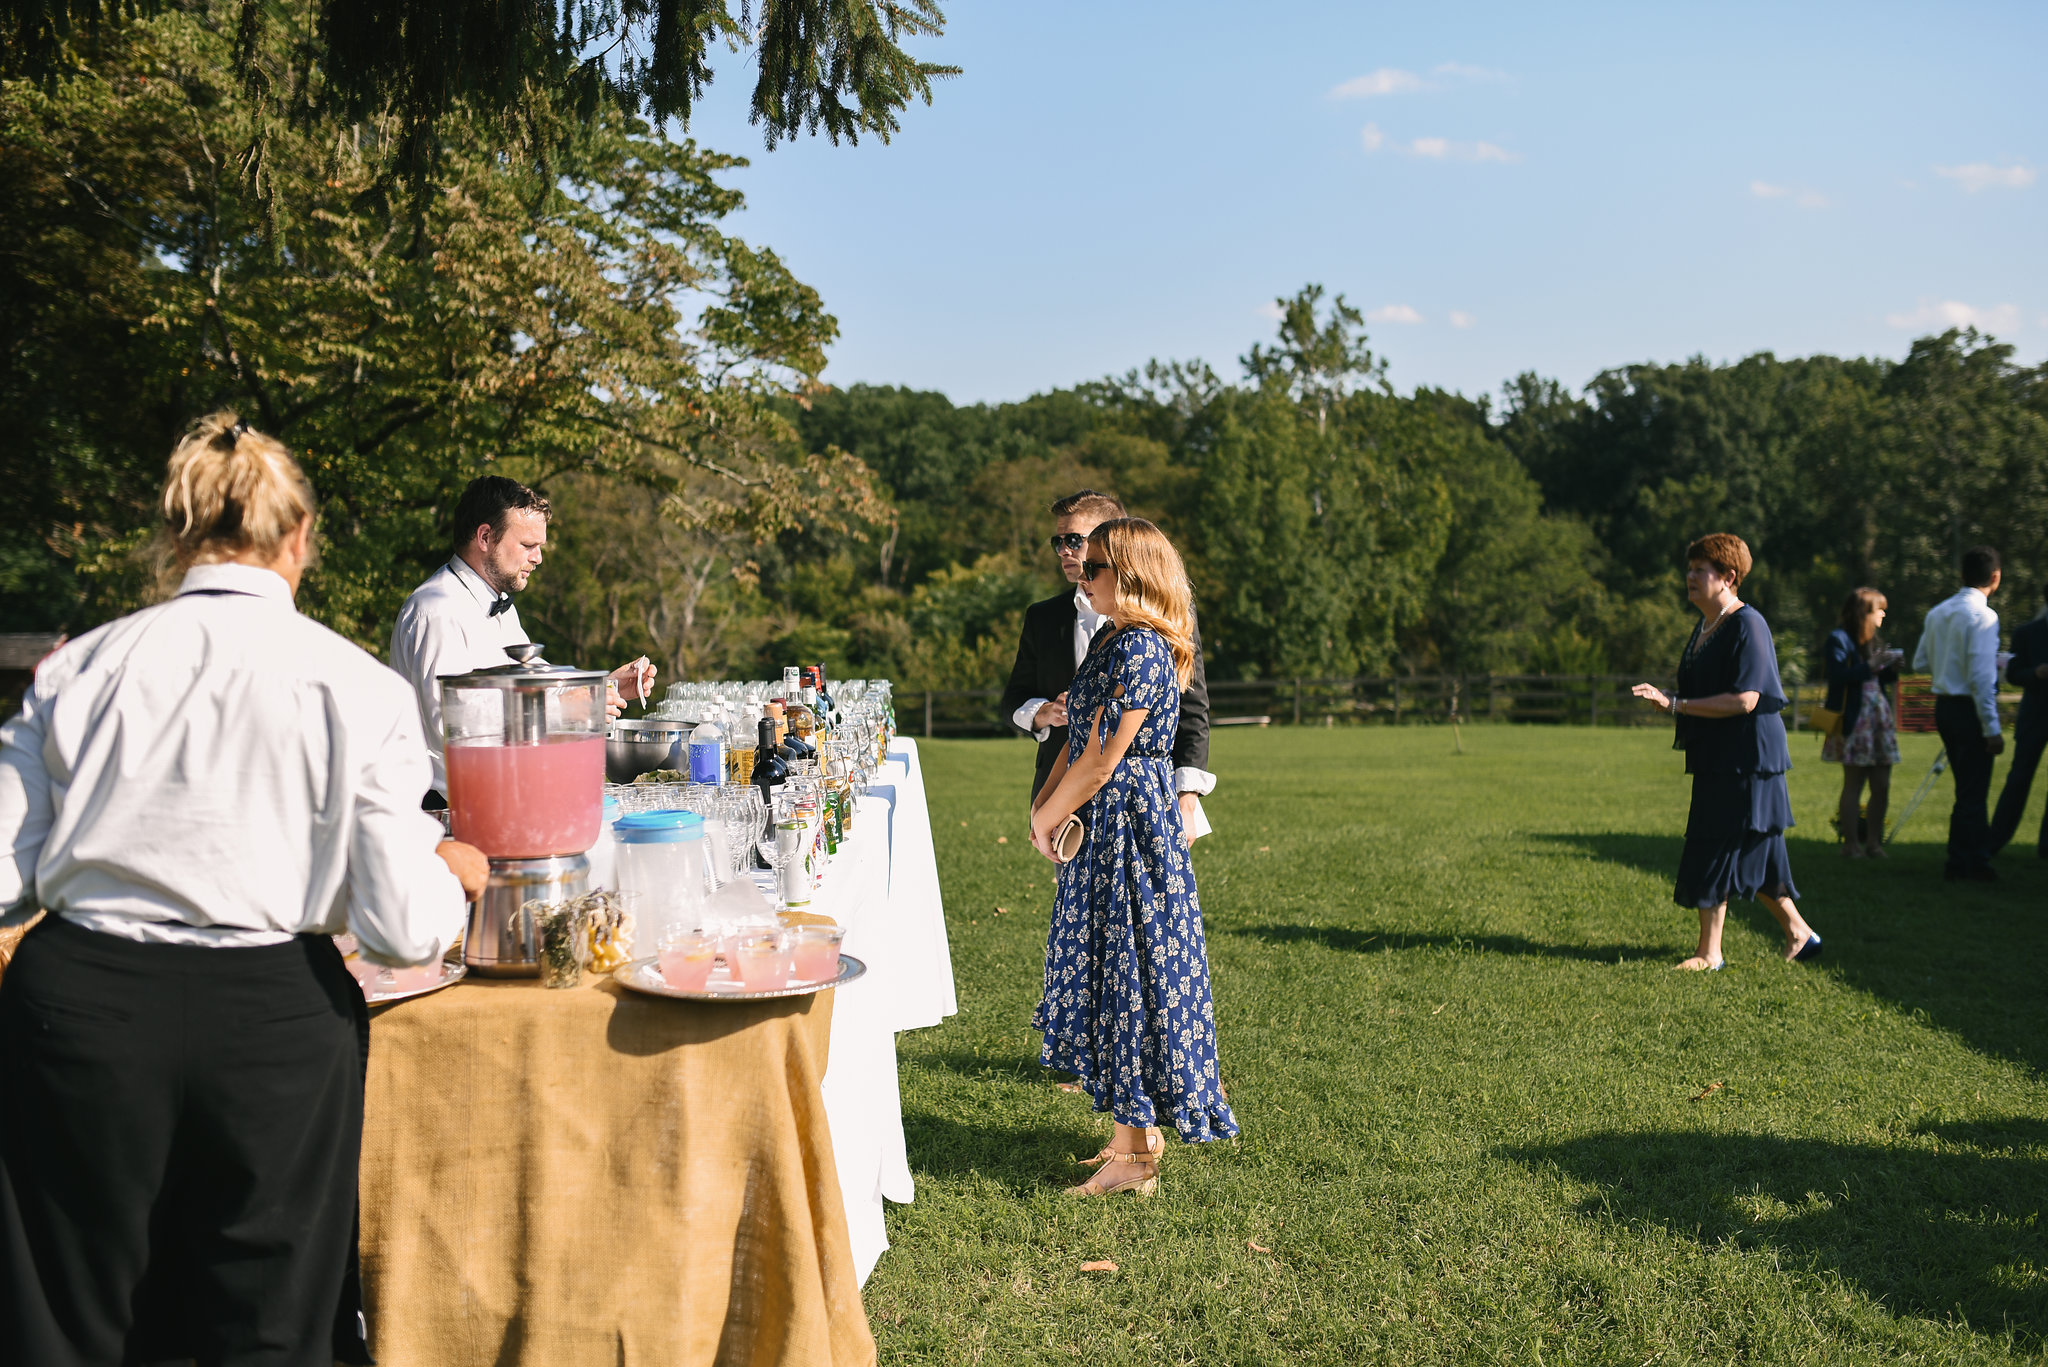  Maryland, Eastern Shore, Baltimore Wedding Photographer, Romantic, Boho, Backyard Wedding, Nature, Wedding Guests Getting Drinks at Reception Bar, Outdoor Reception 